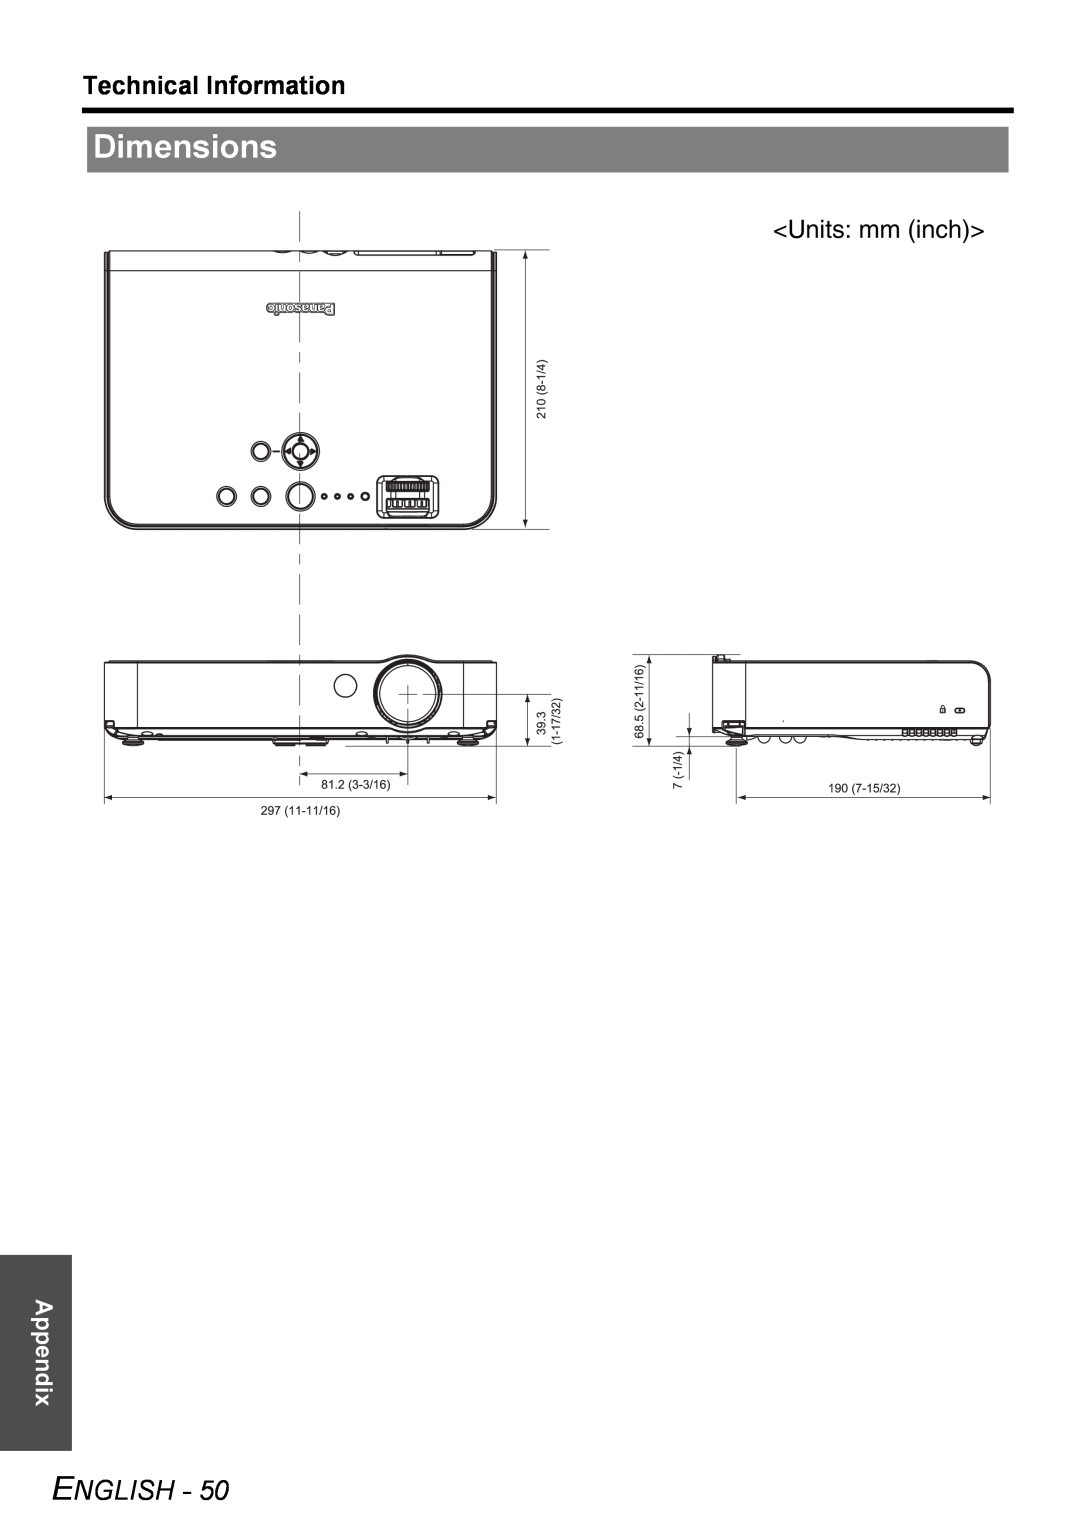 Panasonic PT-LB51NTU operating instructions Dimensions, English, Technical Information, Units mm inch, Appendix 